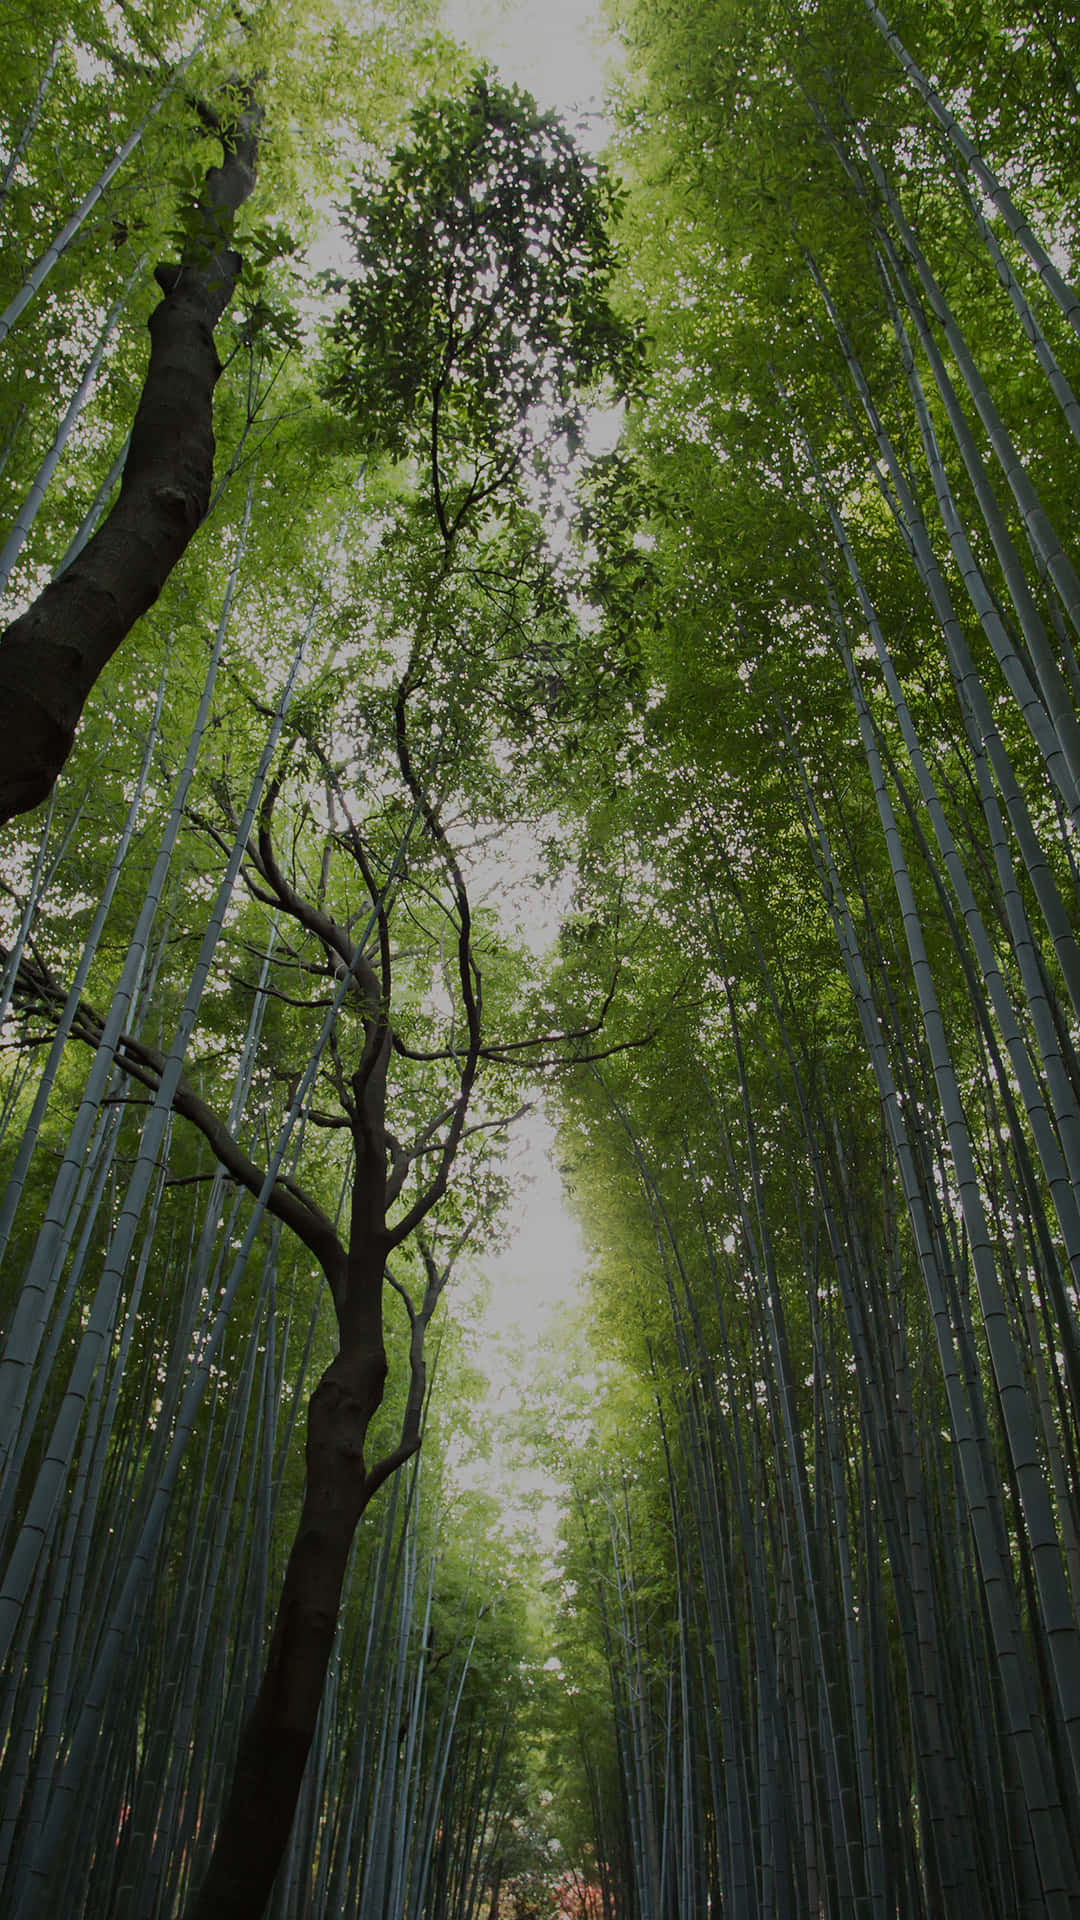 Unbosque De Bambú Con Árboles Altos Y Un Camino Fondo de pantalla